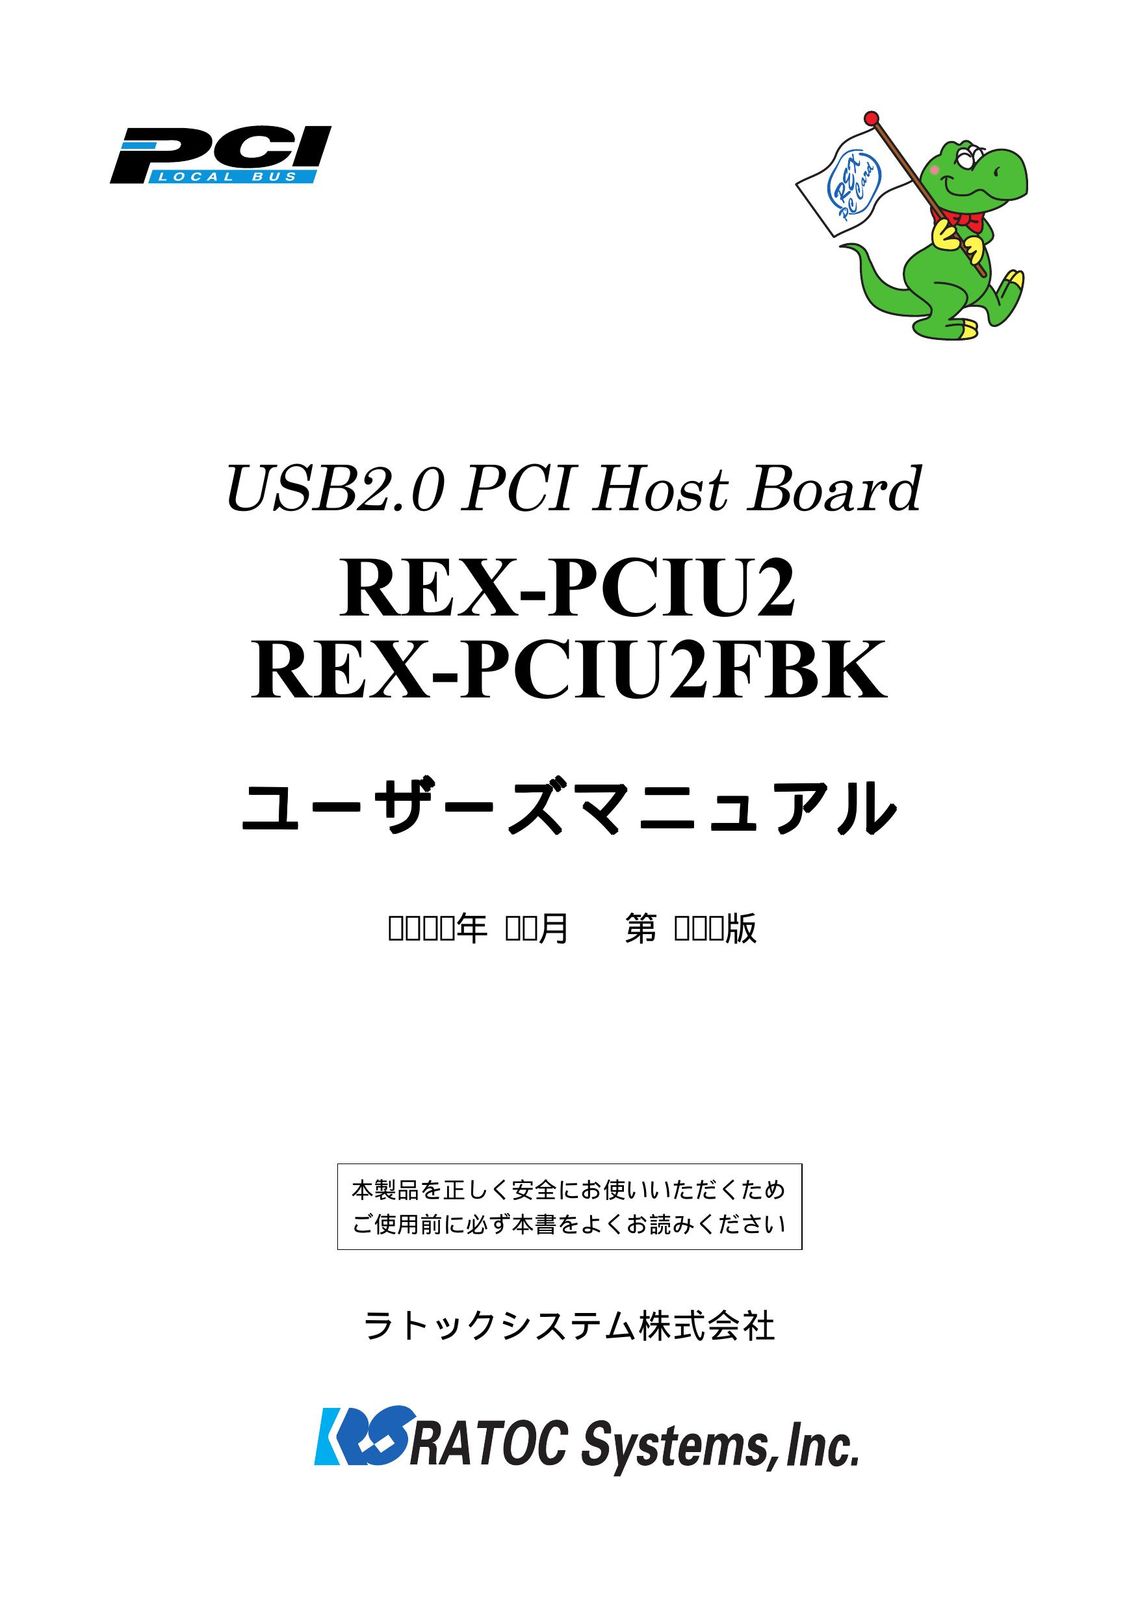 Ratoc Systems REX-PCIU2 Network Card User Manual